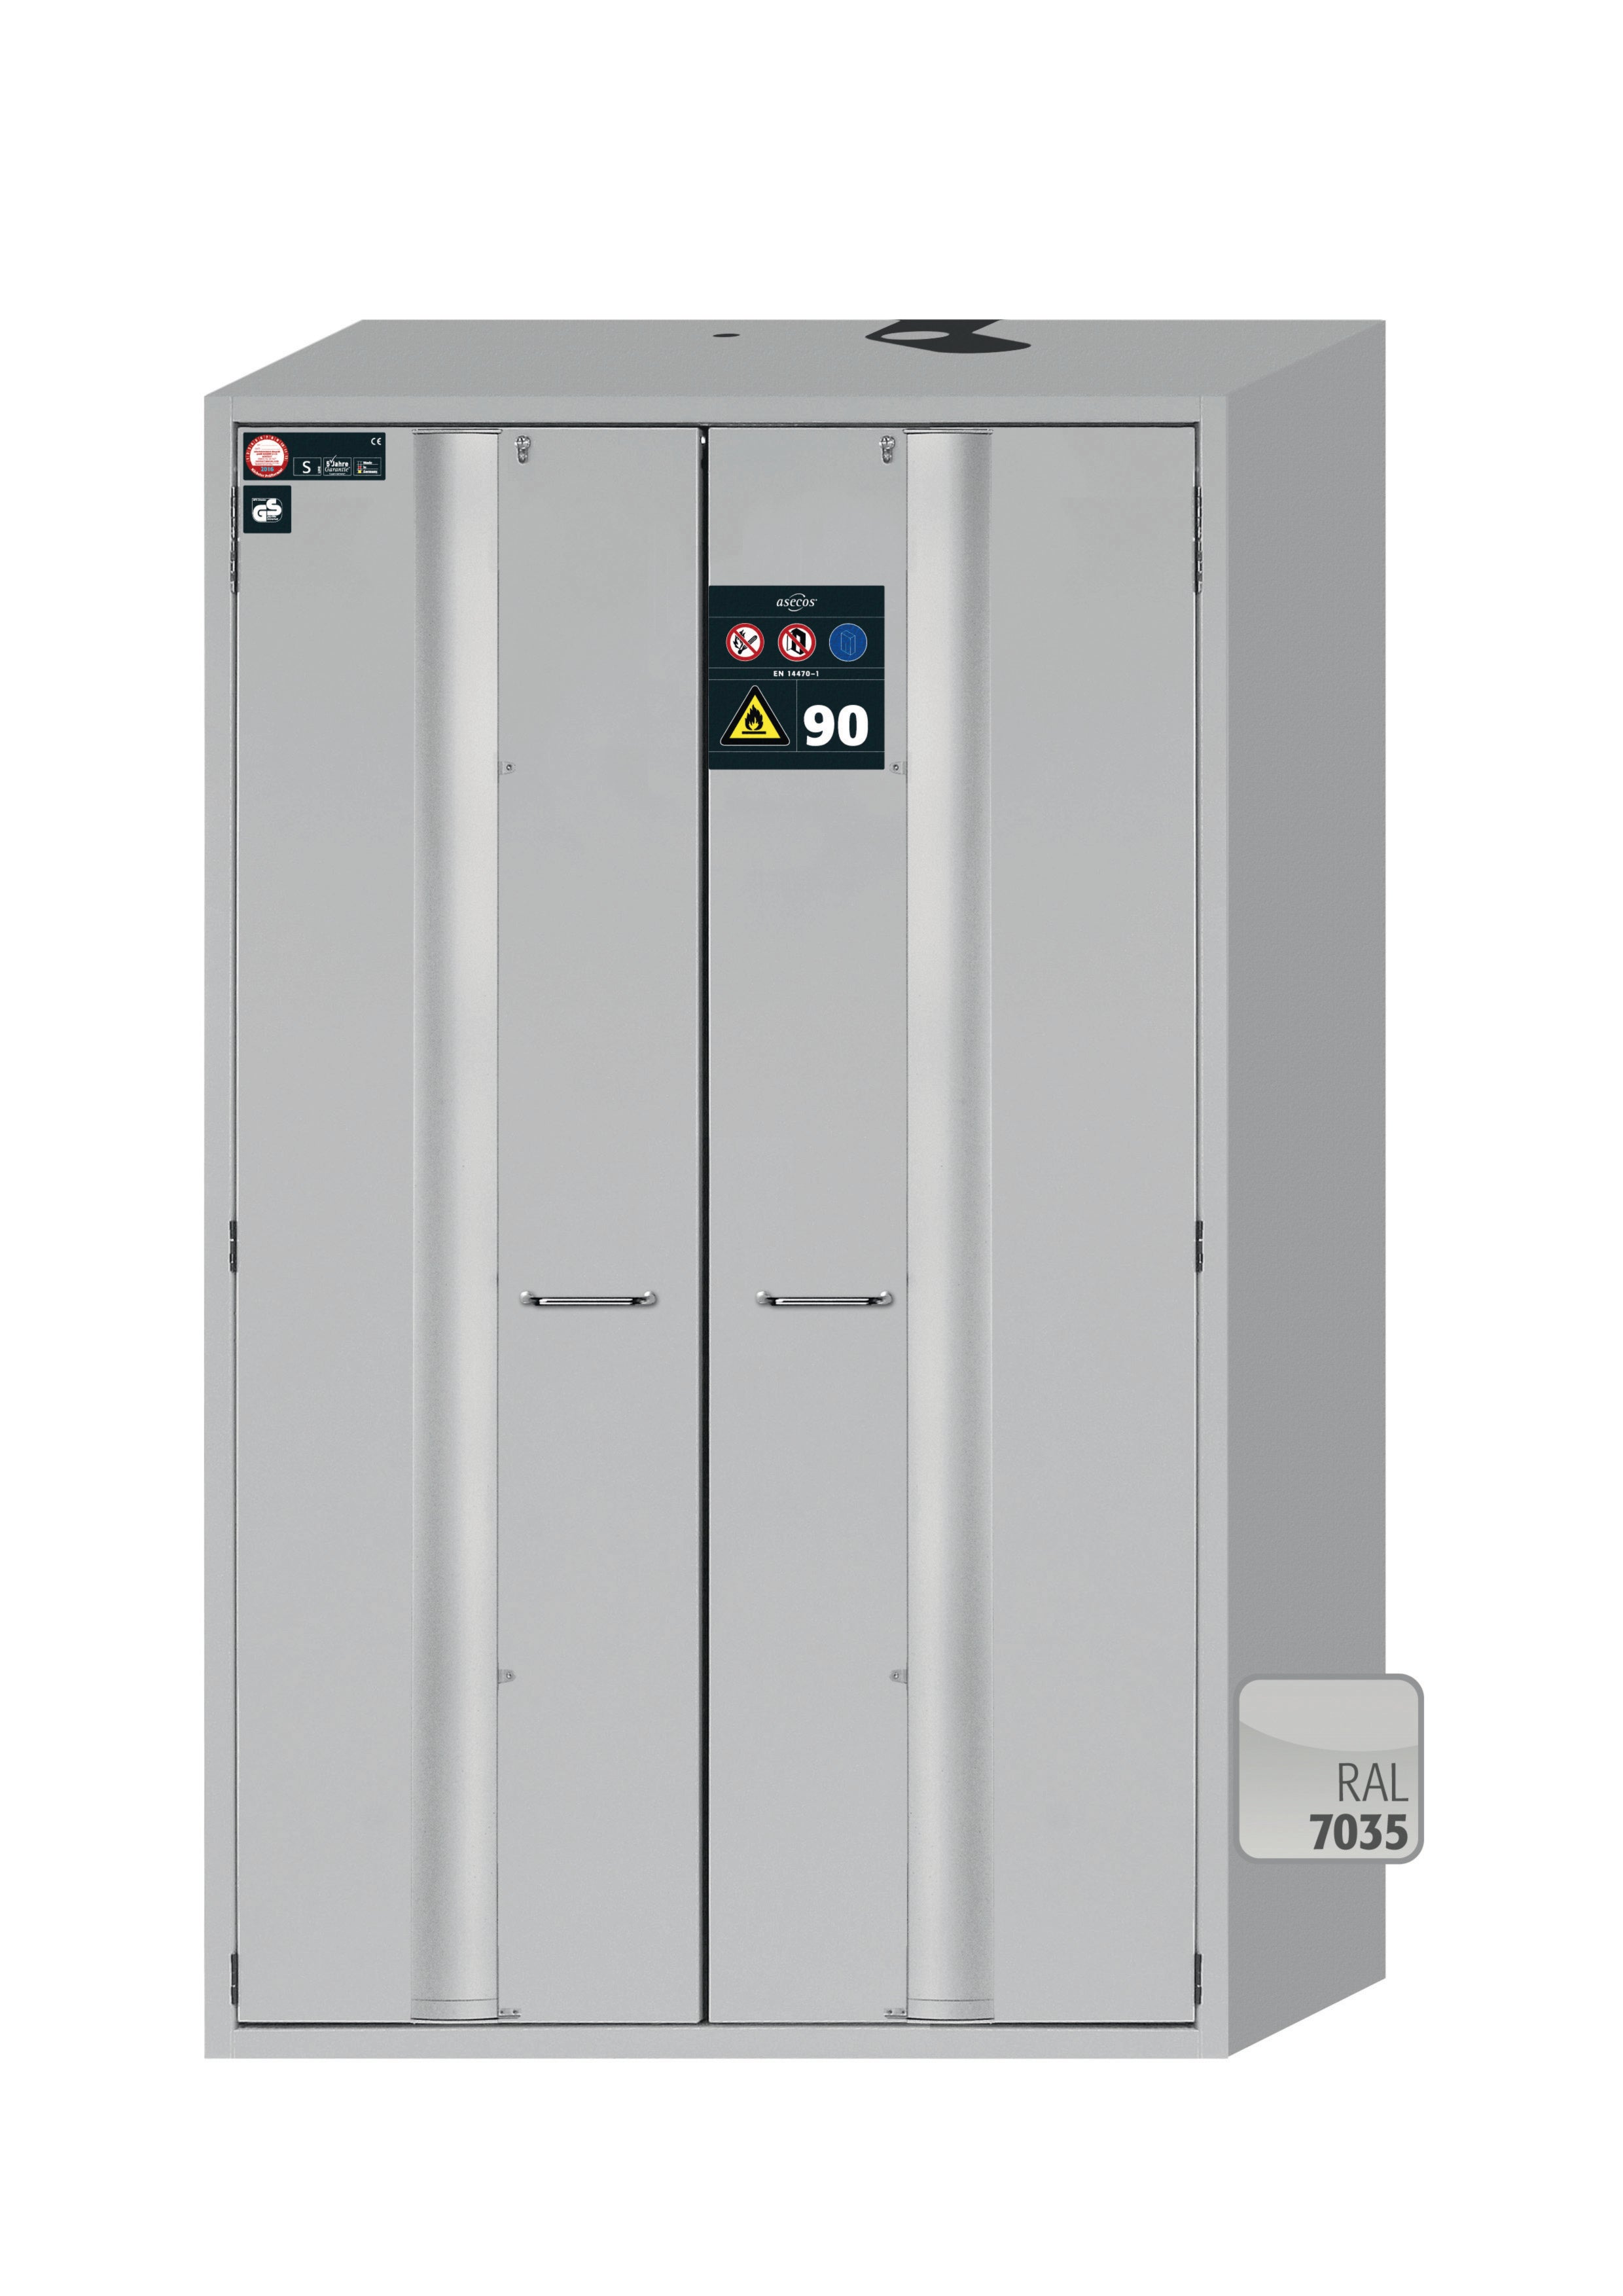 Type 90 safety storage cabinet S-PHOENIX-90 model S90.196.120.FDAS in light grey RAL 7035 with 3x drawer (standard) (sheet steel),